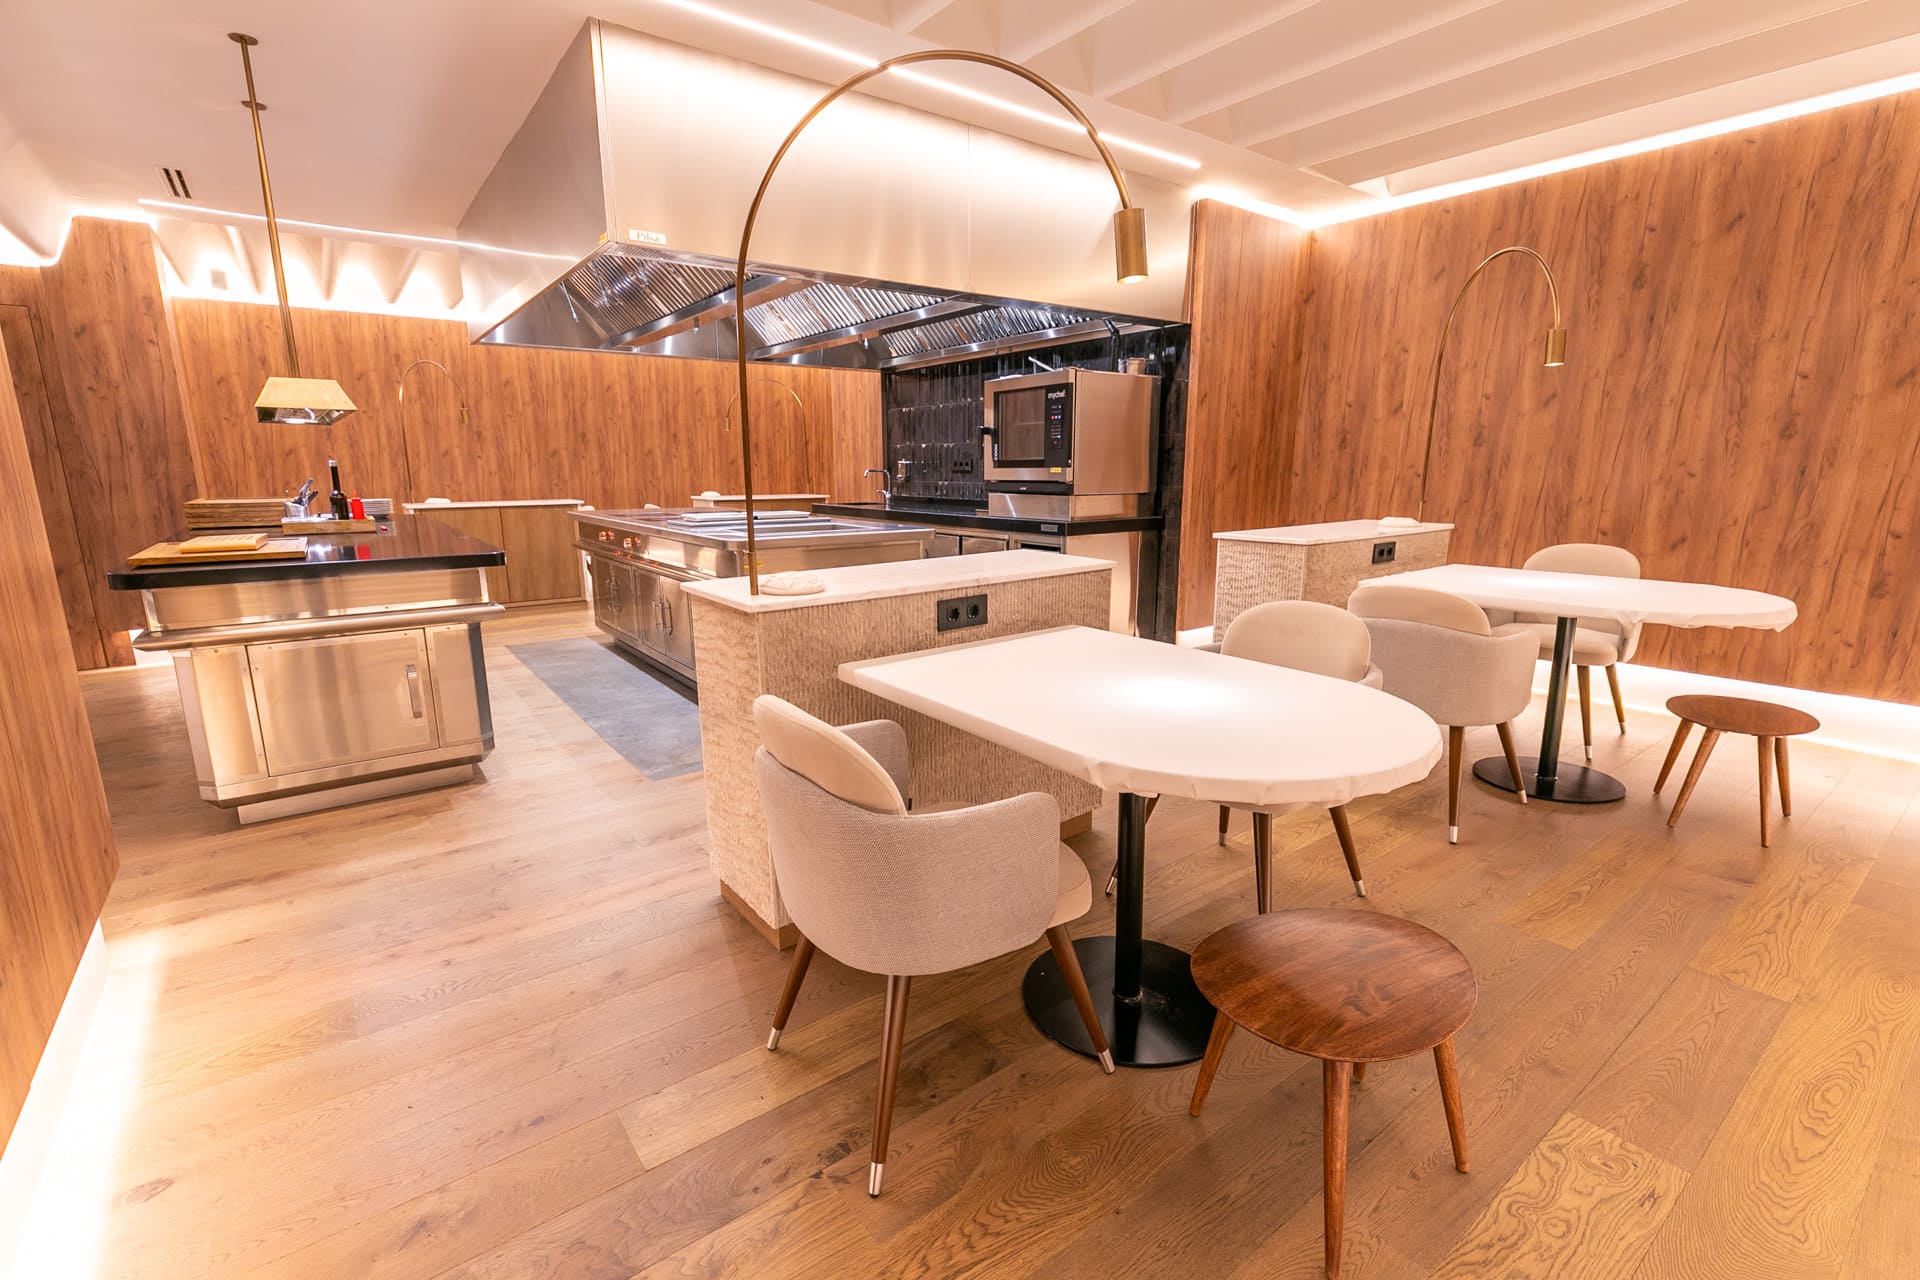 restaurante marcos gijon estrella michelin ilusion3 jaen 23 digital studio